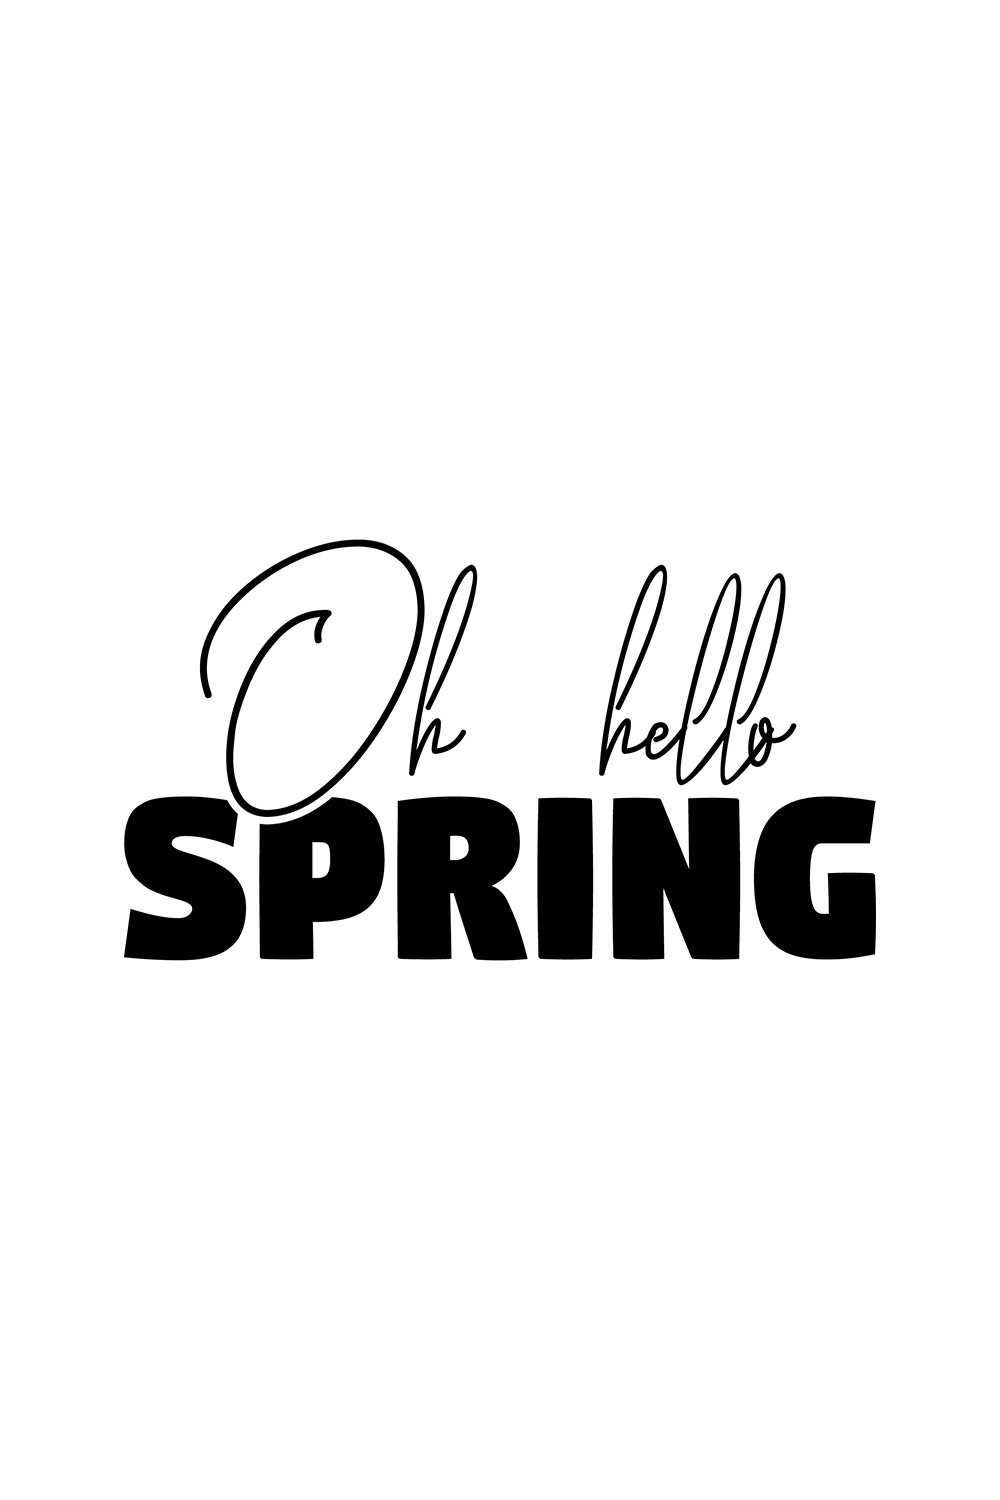 Typography Oh hello spring T-shirt SVG Design pinterest image.